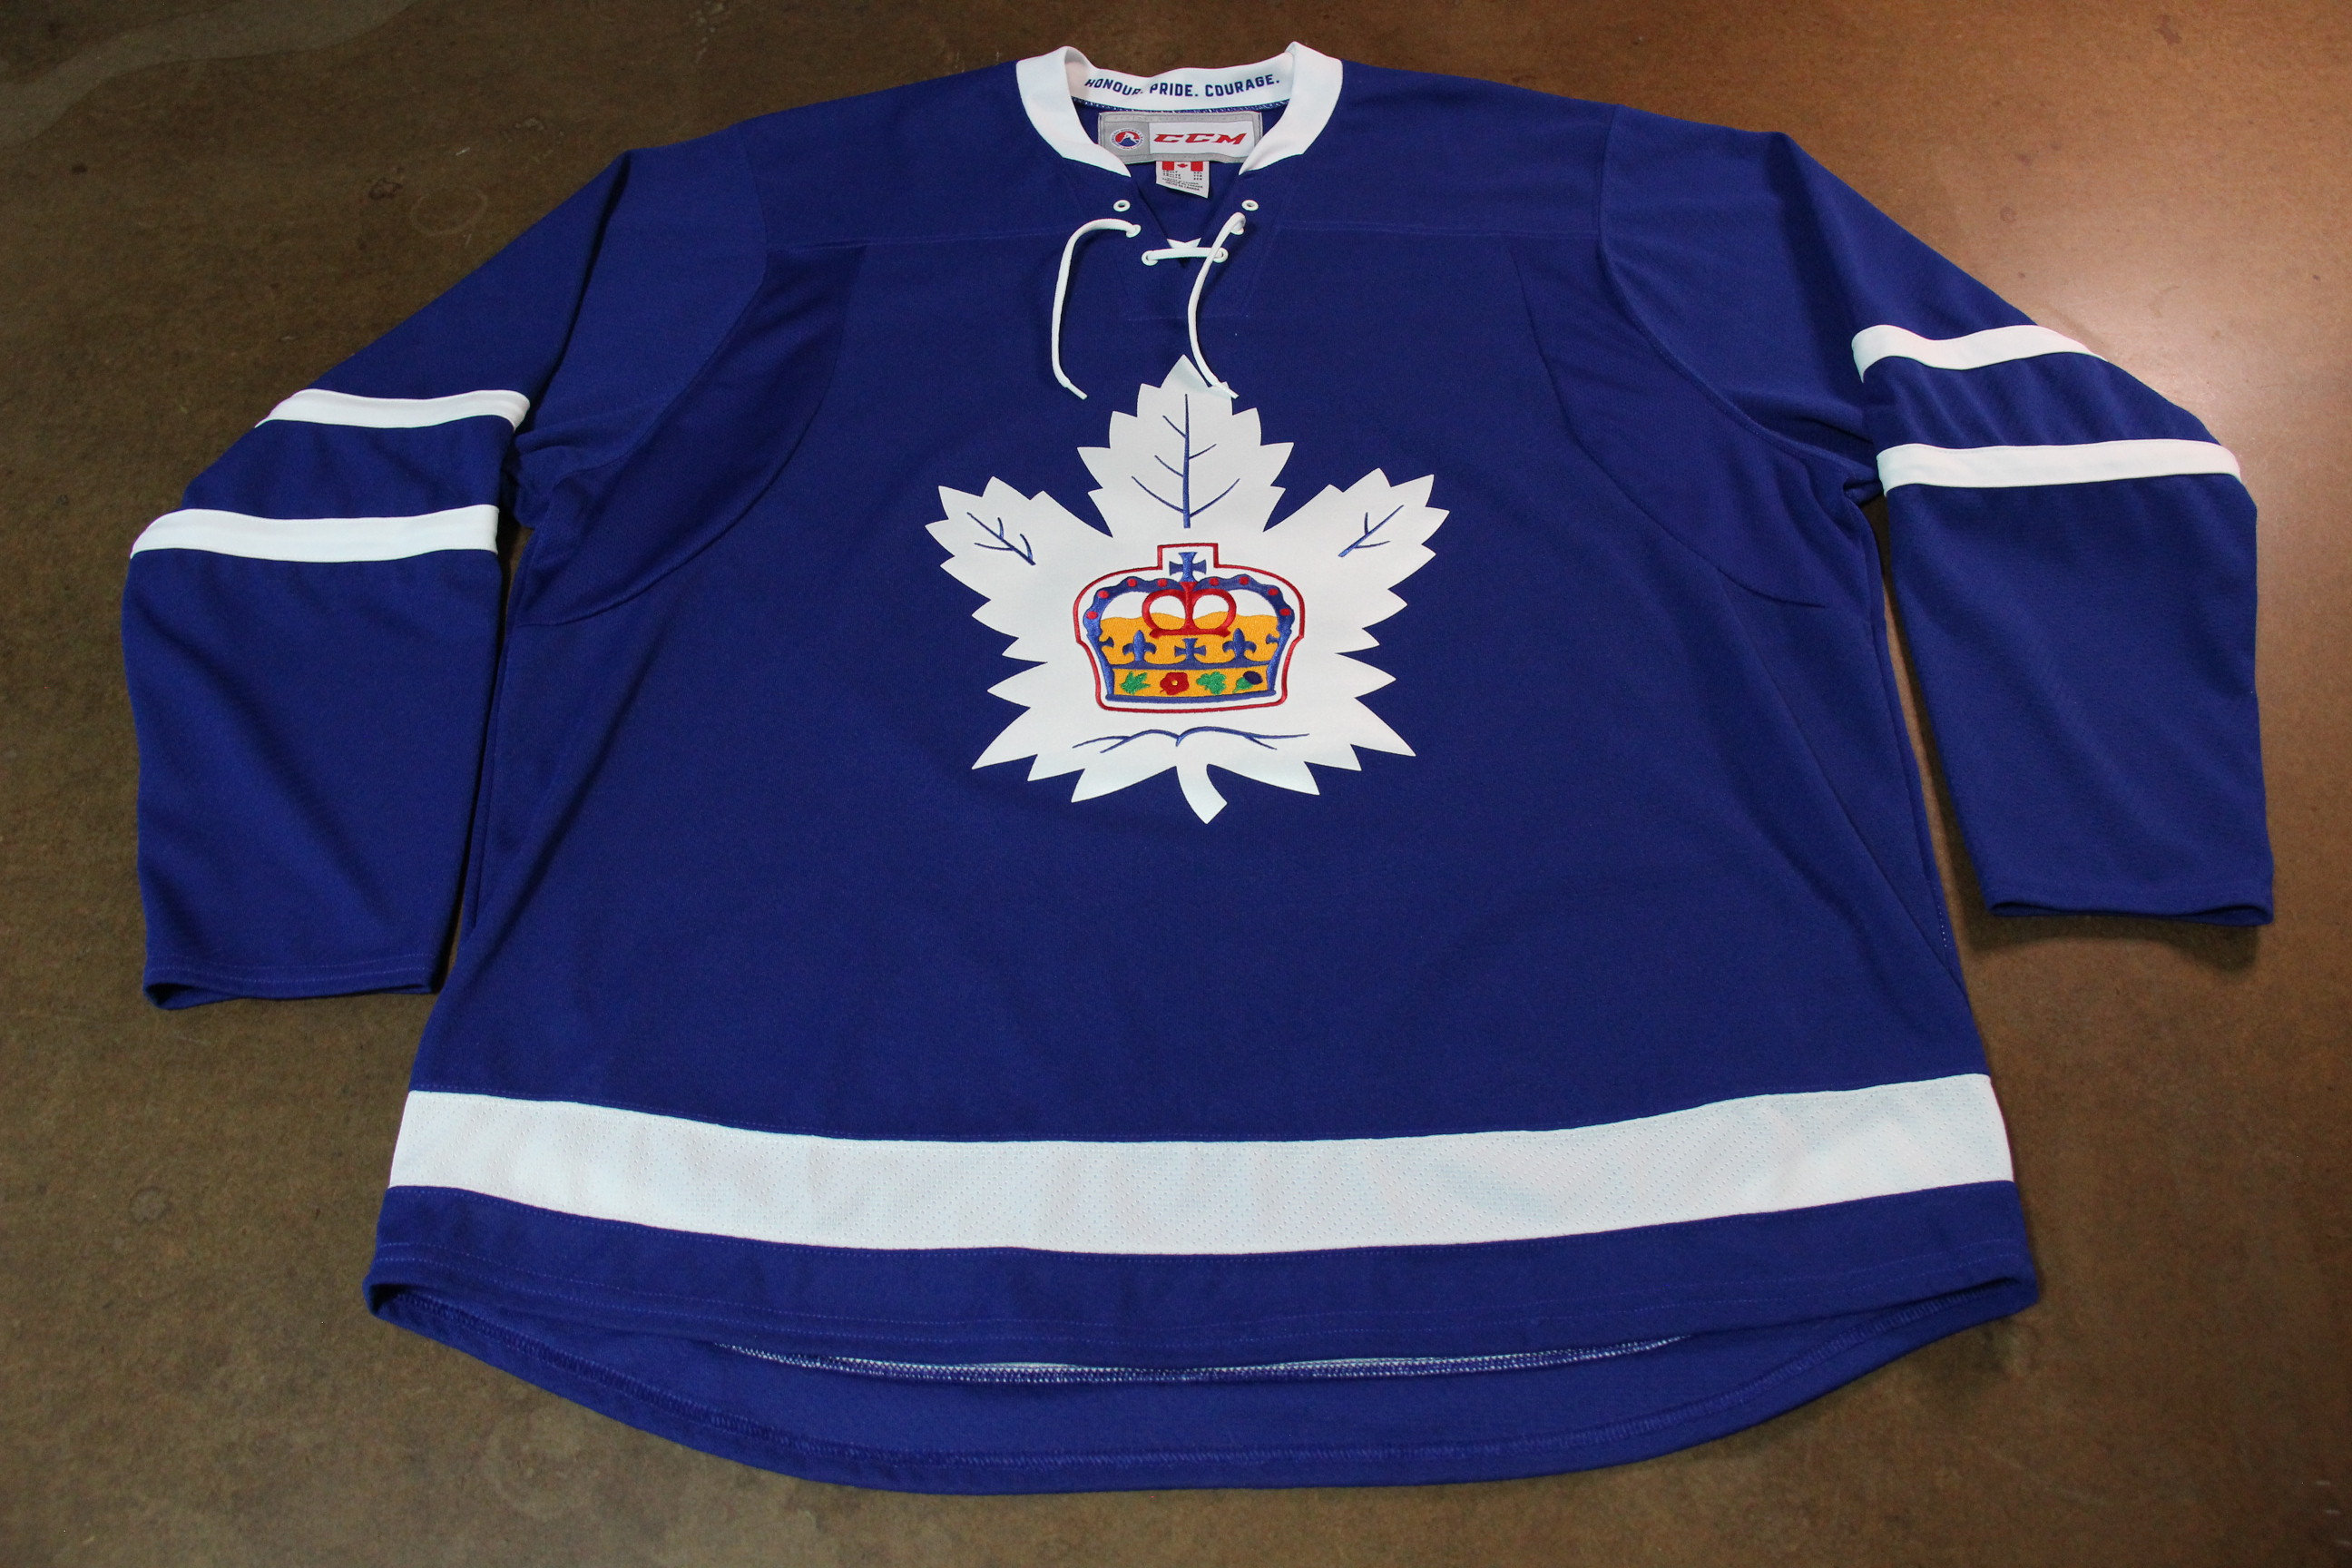  Borje Salming Long Sleeve Shirt - Borje Salming Toronto 21  Sticks : Sports & Outdoors